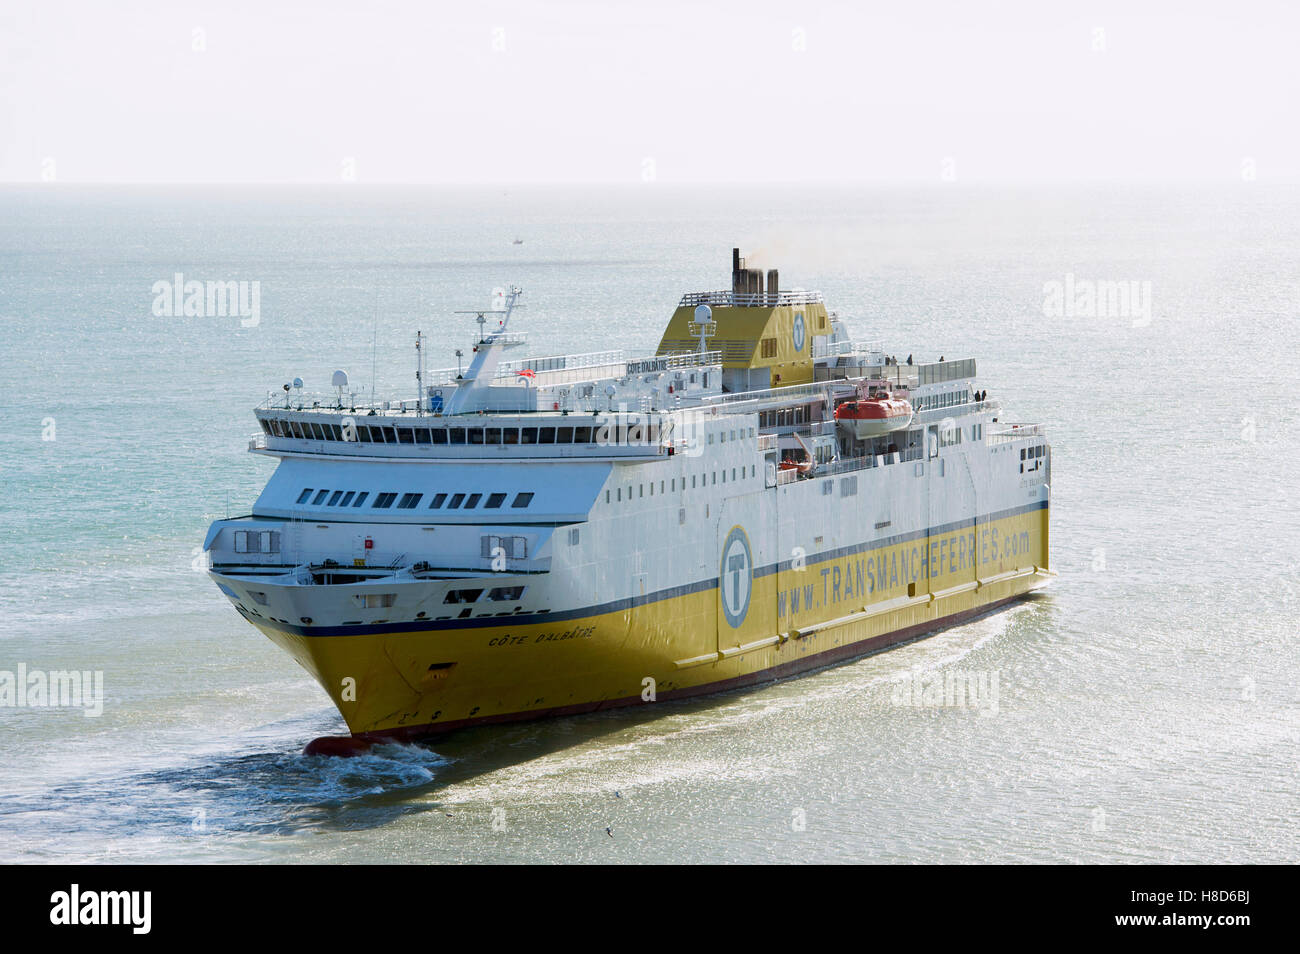 Transmanche Ferry Cote d'Albatre leaves Newhaven harbour East Sussex UK Stock Photo